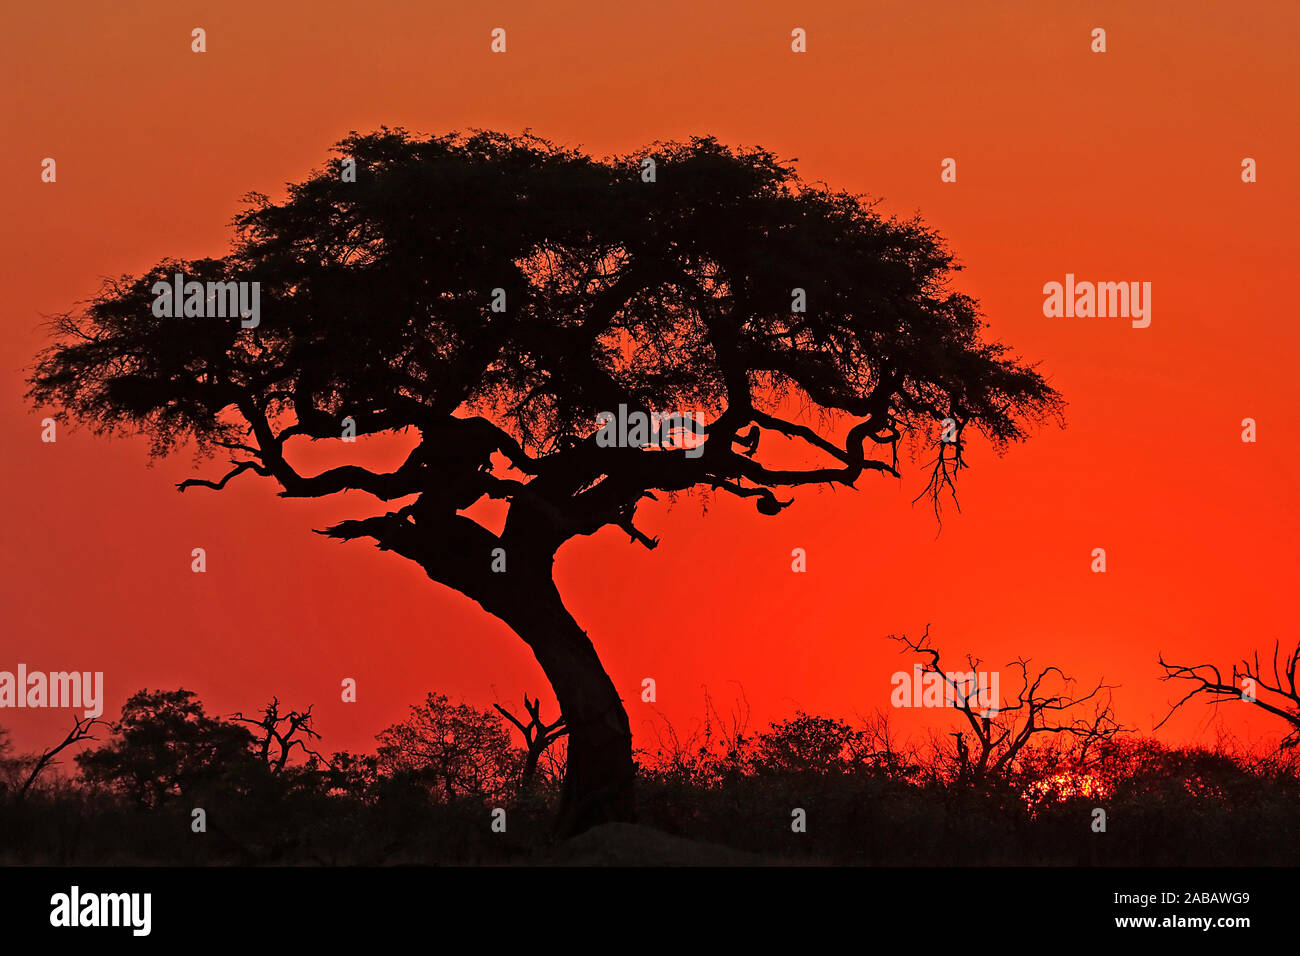 Baum vor Sonnenuntergang, Silhouette Stock Photo